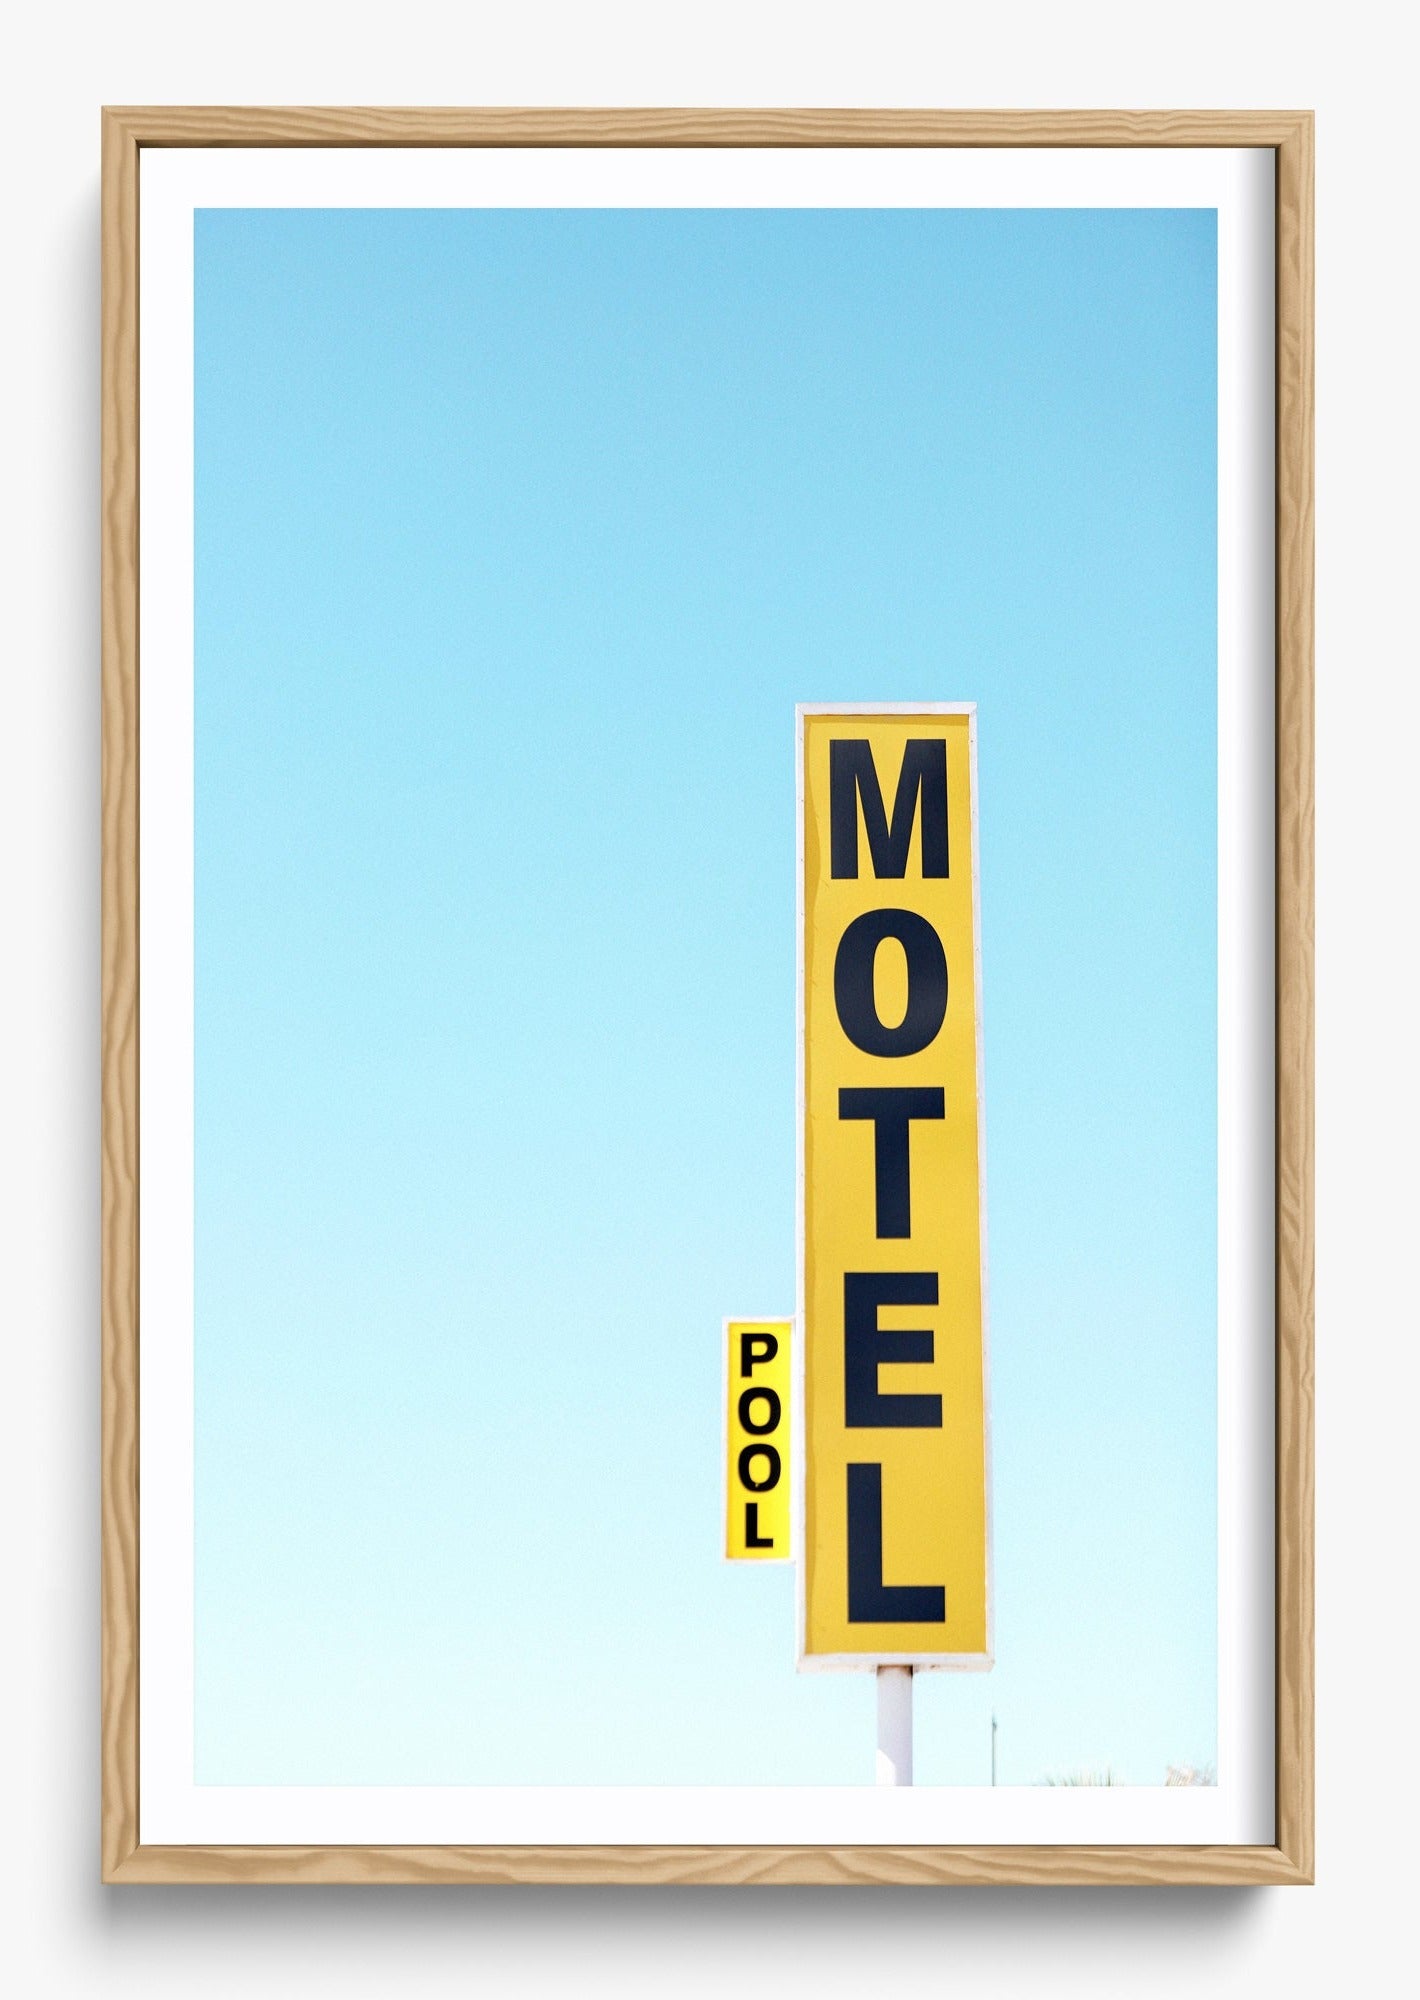 Motel Pool